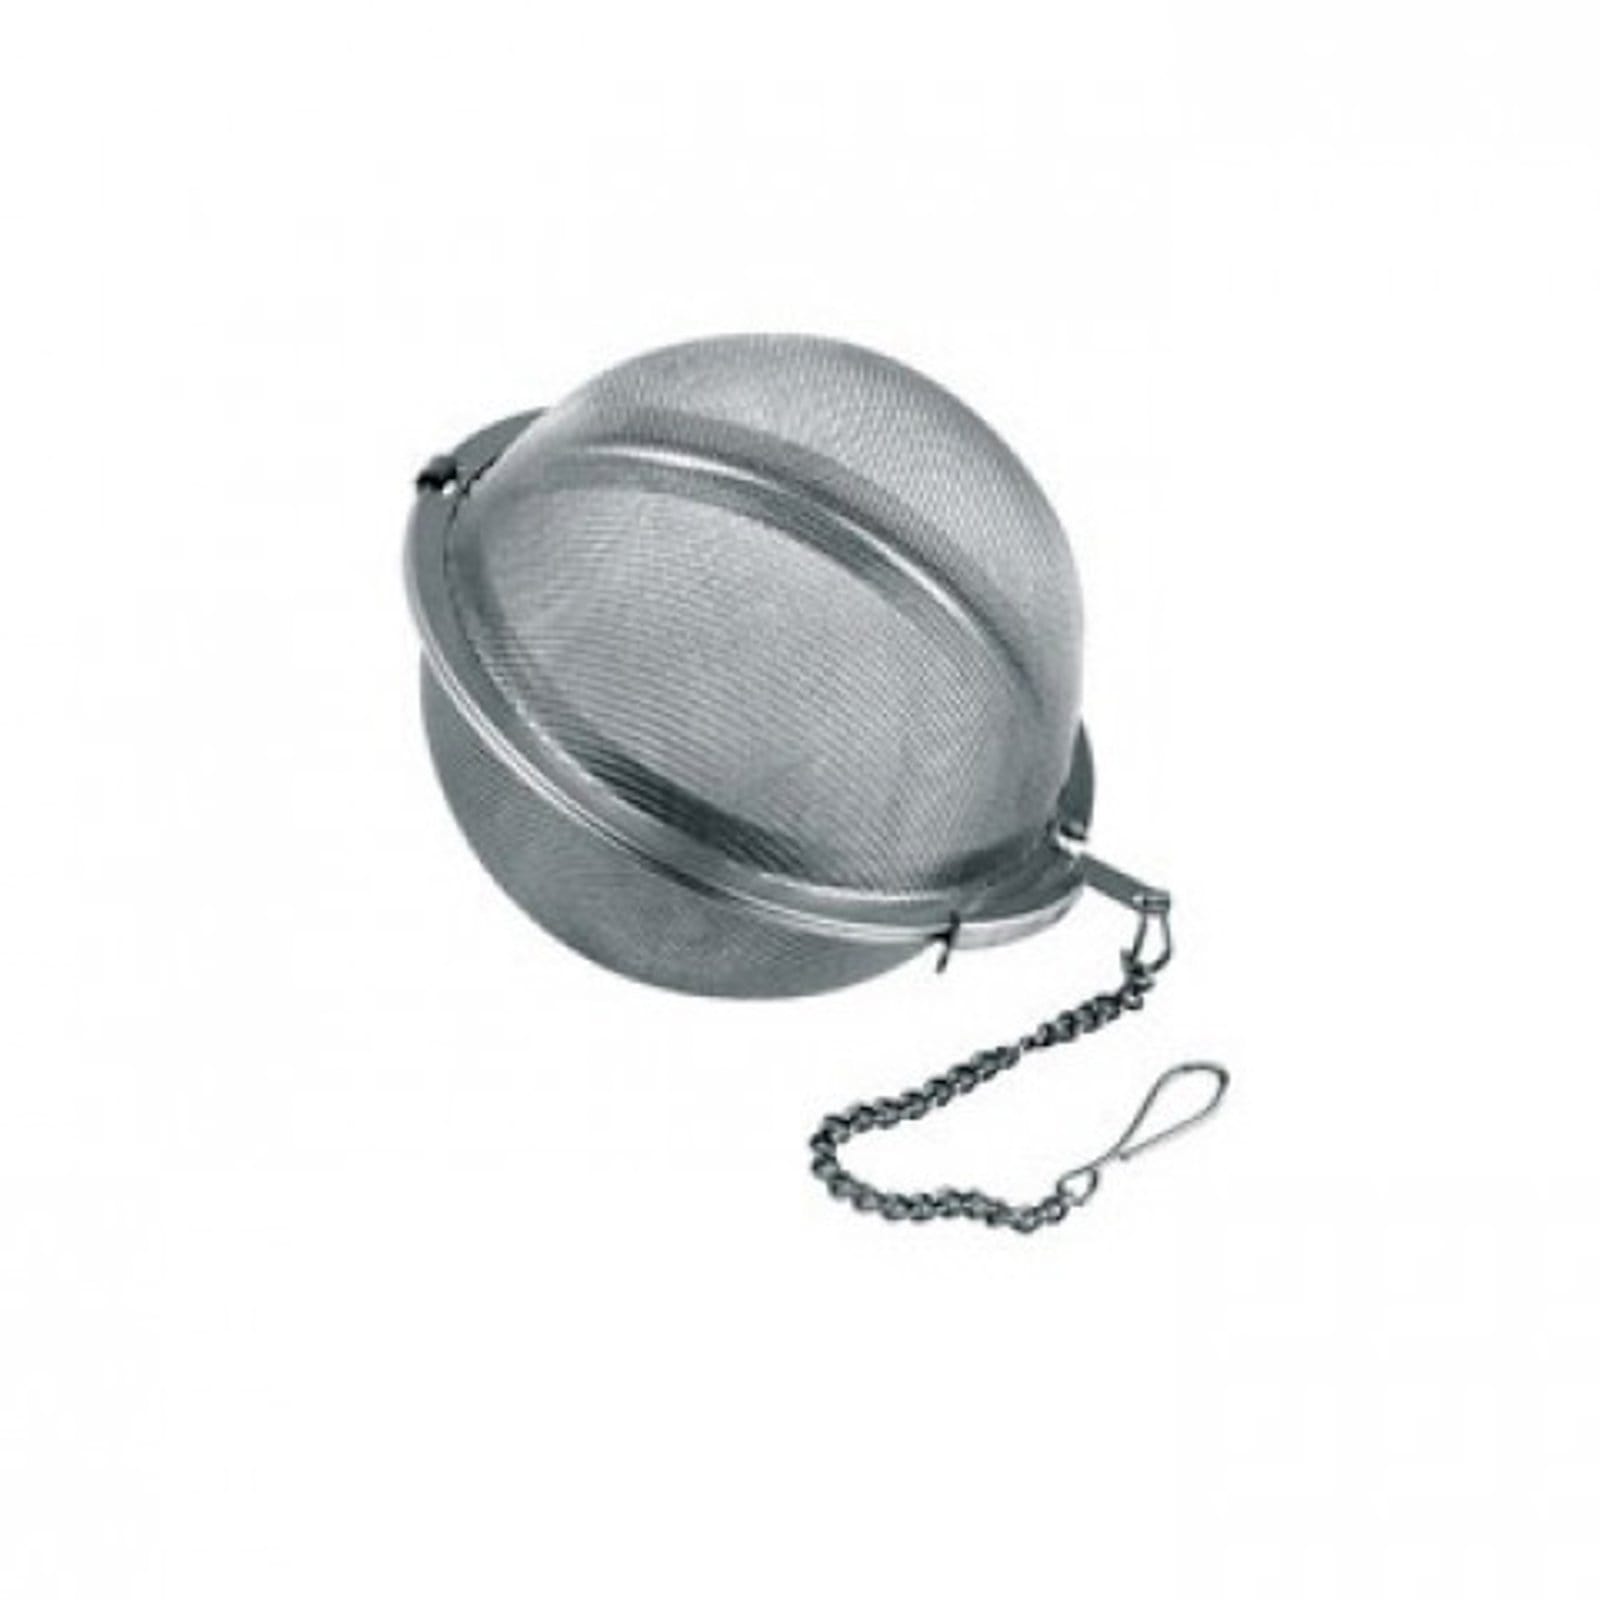 Kombucha Mesh Tea Ball Infuser: 2 inch